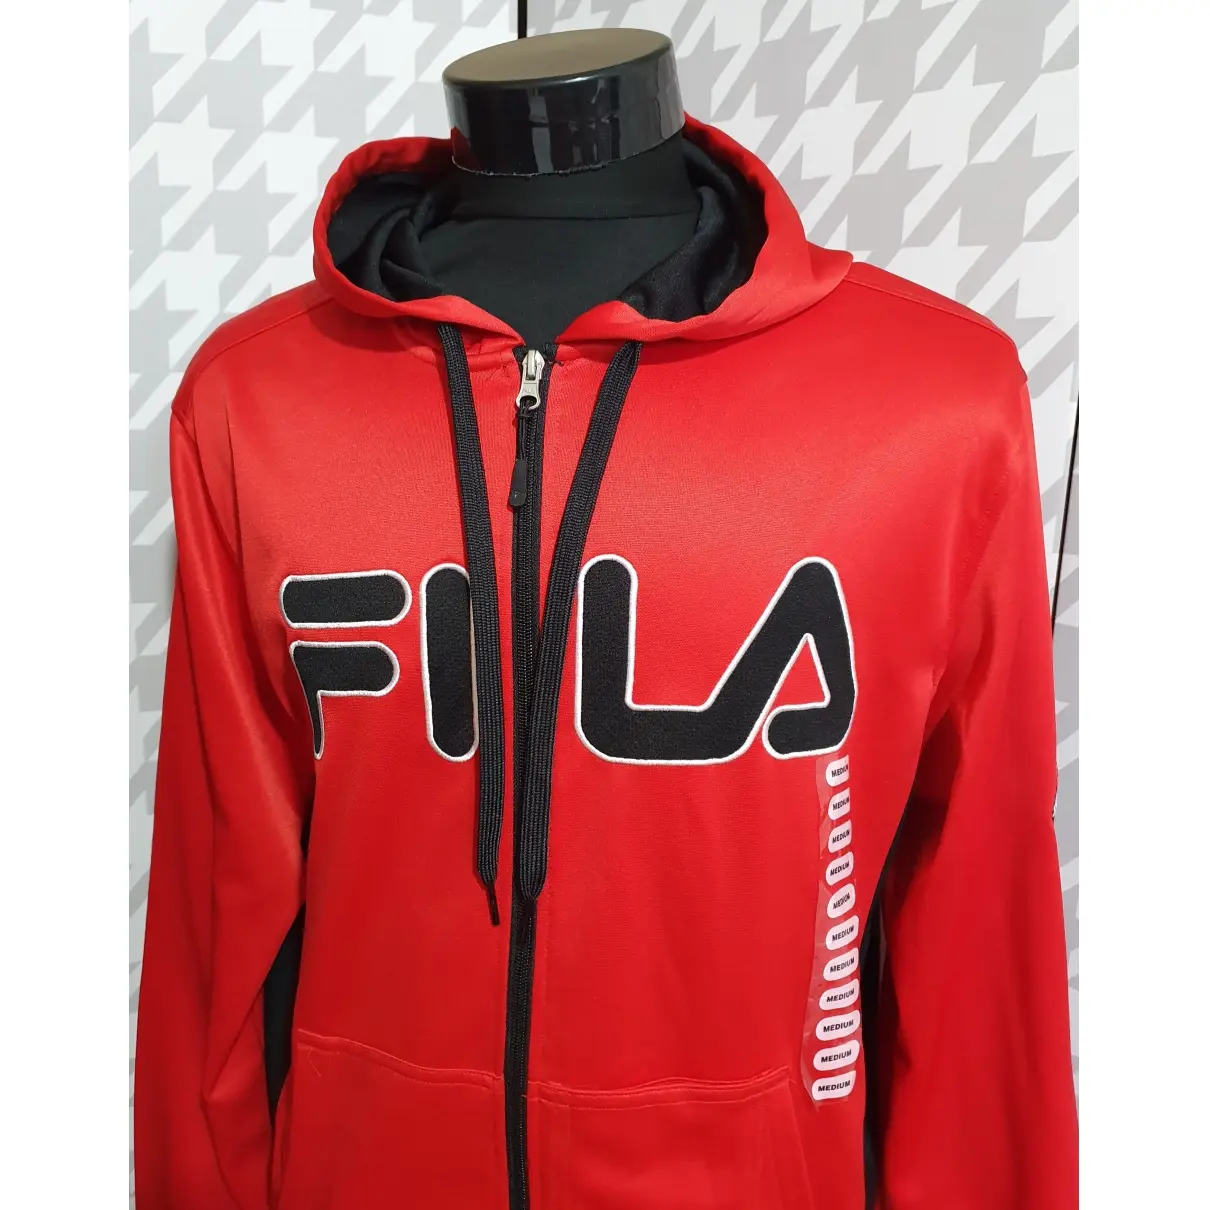 Buy Fila Vest online